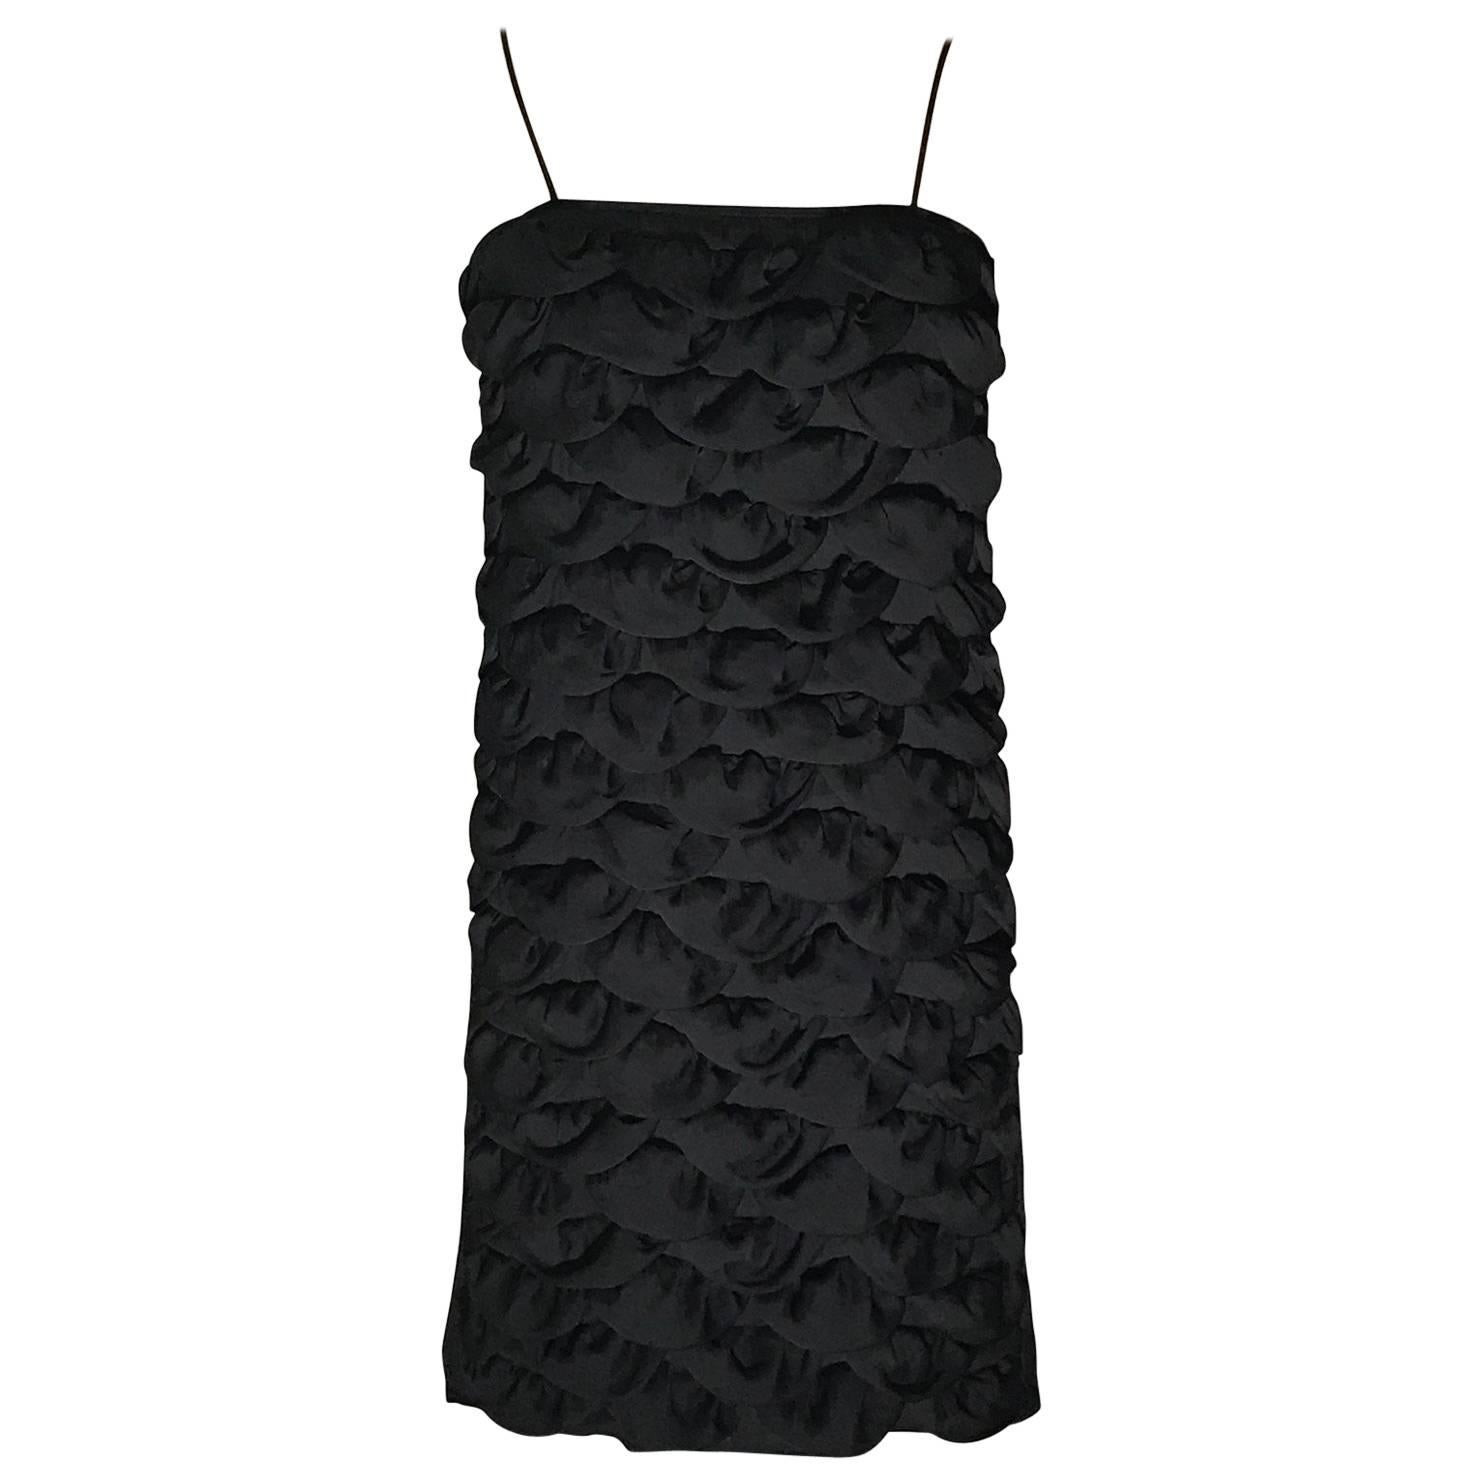 Chanel 2009 Swim Cover Up Black Petal Textured Spaghetti Strap Mini Dress